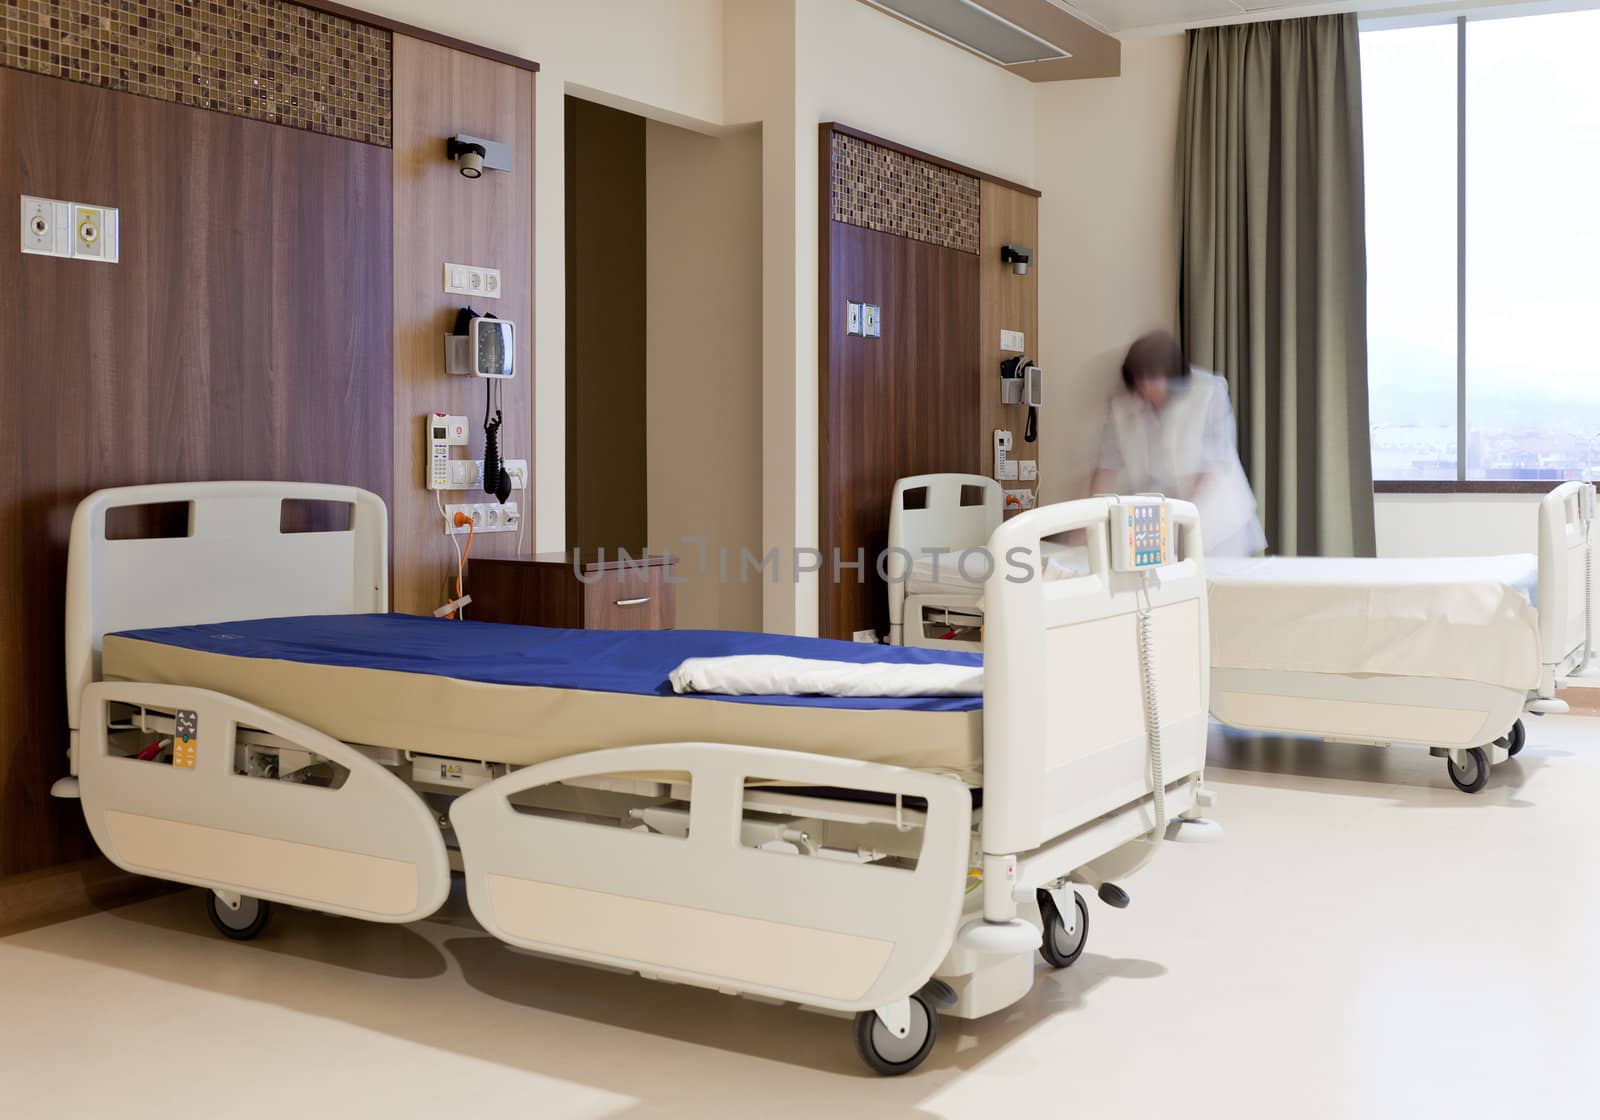 Blurred image of staff member in medical uniformn fixing hospital bed